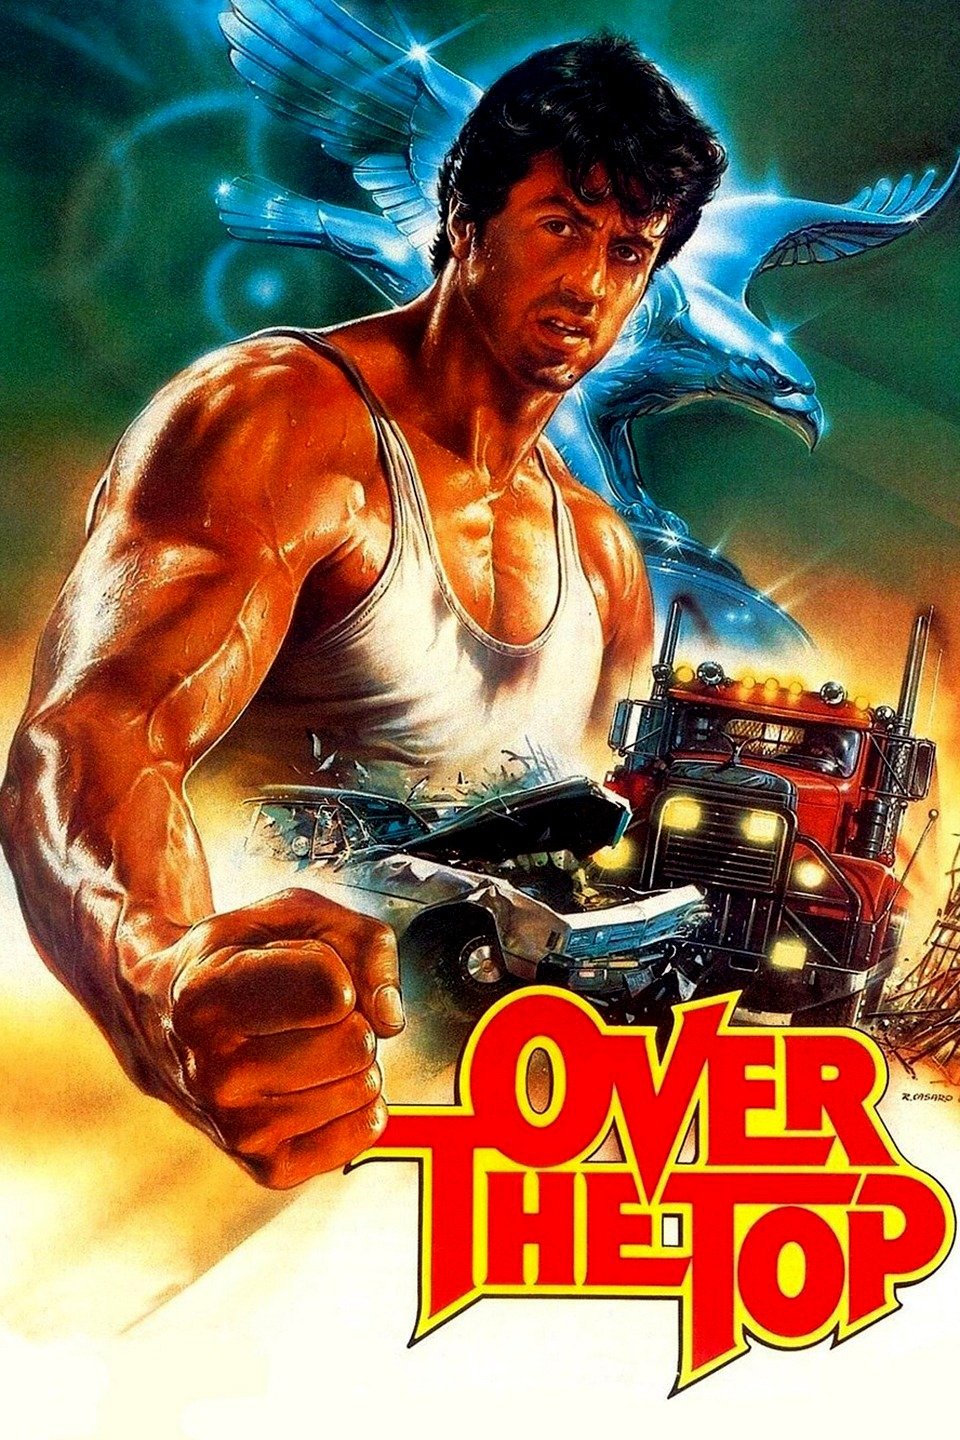 [MINI Super-HQ] Over The Top (1987) พ่อครับ อย่ายอมแพ้ [1080p] [พากย์ไทย 5.1+ เสียงอังกฤษ 5.1] [บรรยายไทย + อังกฤษ] [เสียงไทย + ซับไทย] [OPENLOAD]